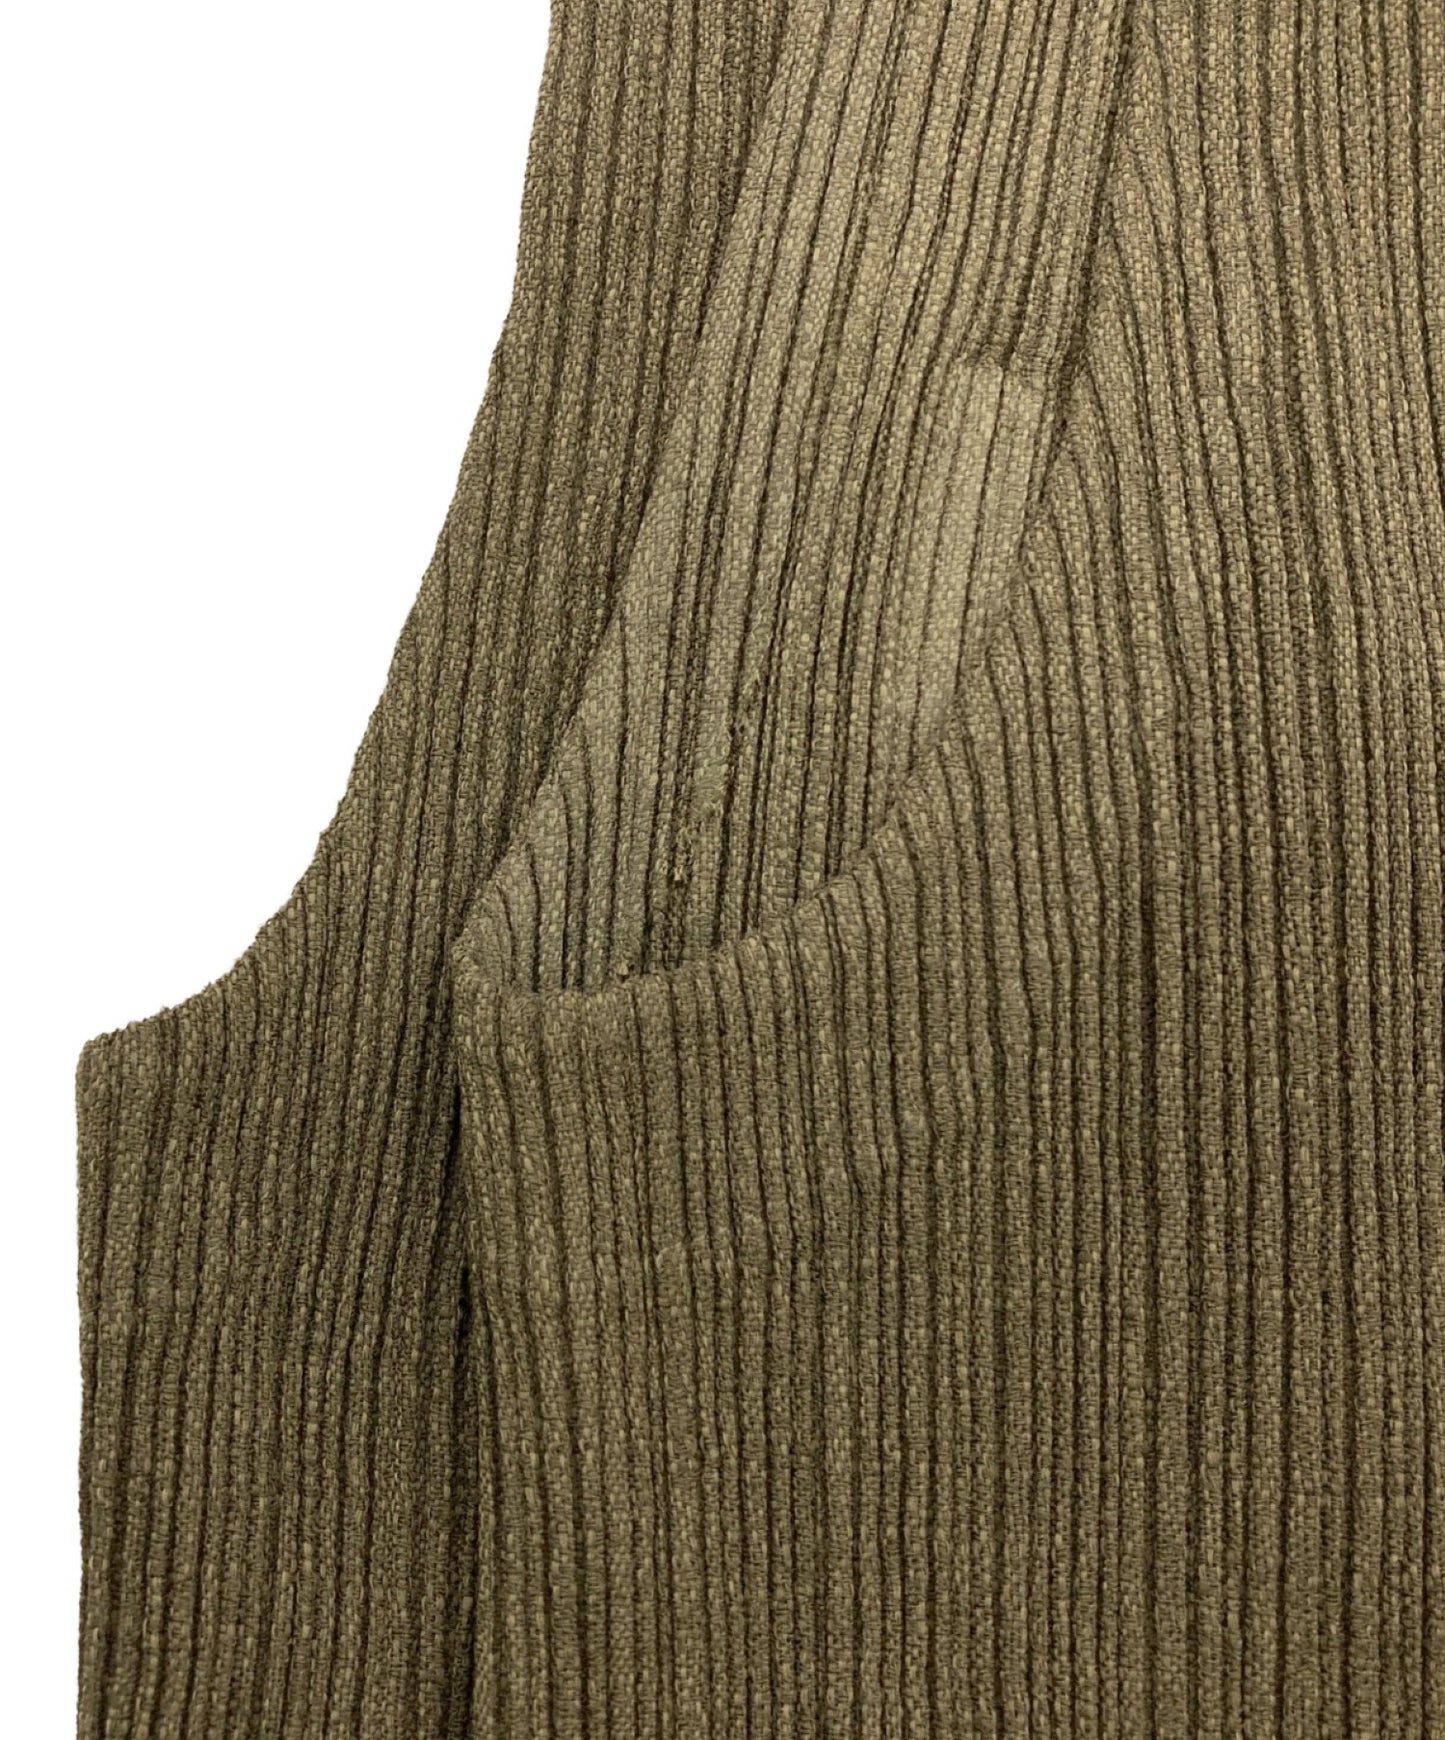 [Pre-owned] ISSEY MIYAKE pleated vest IM72-FE601